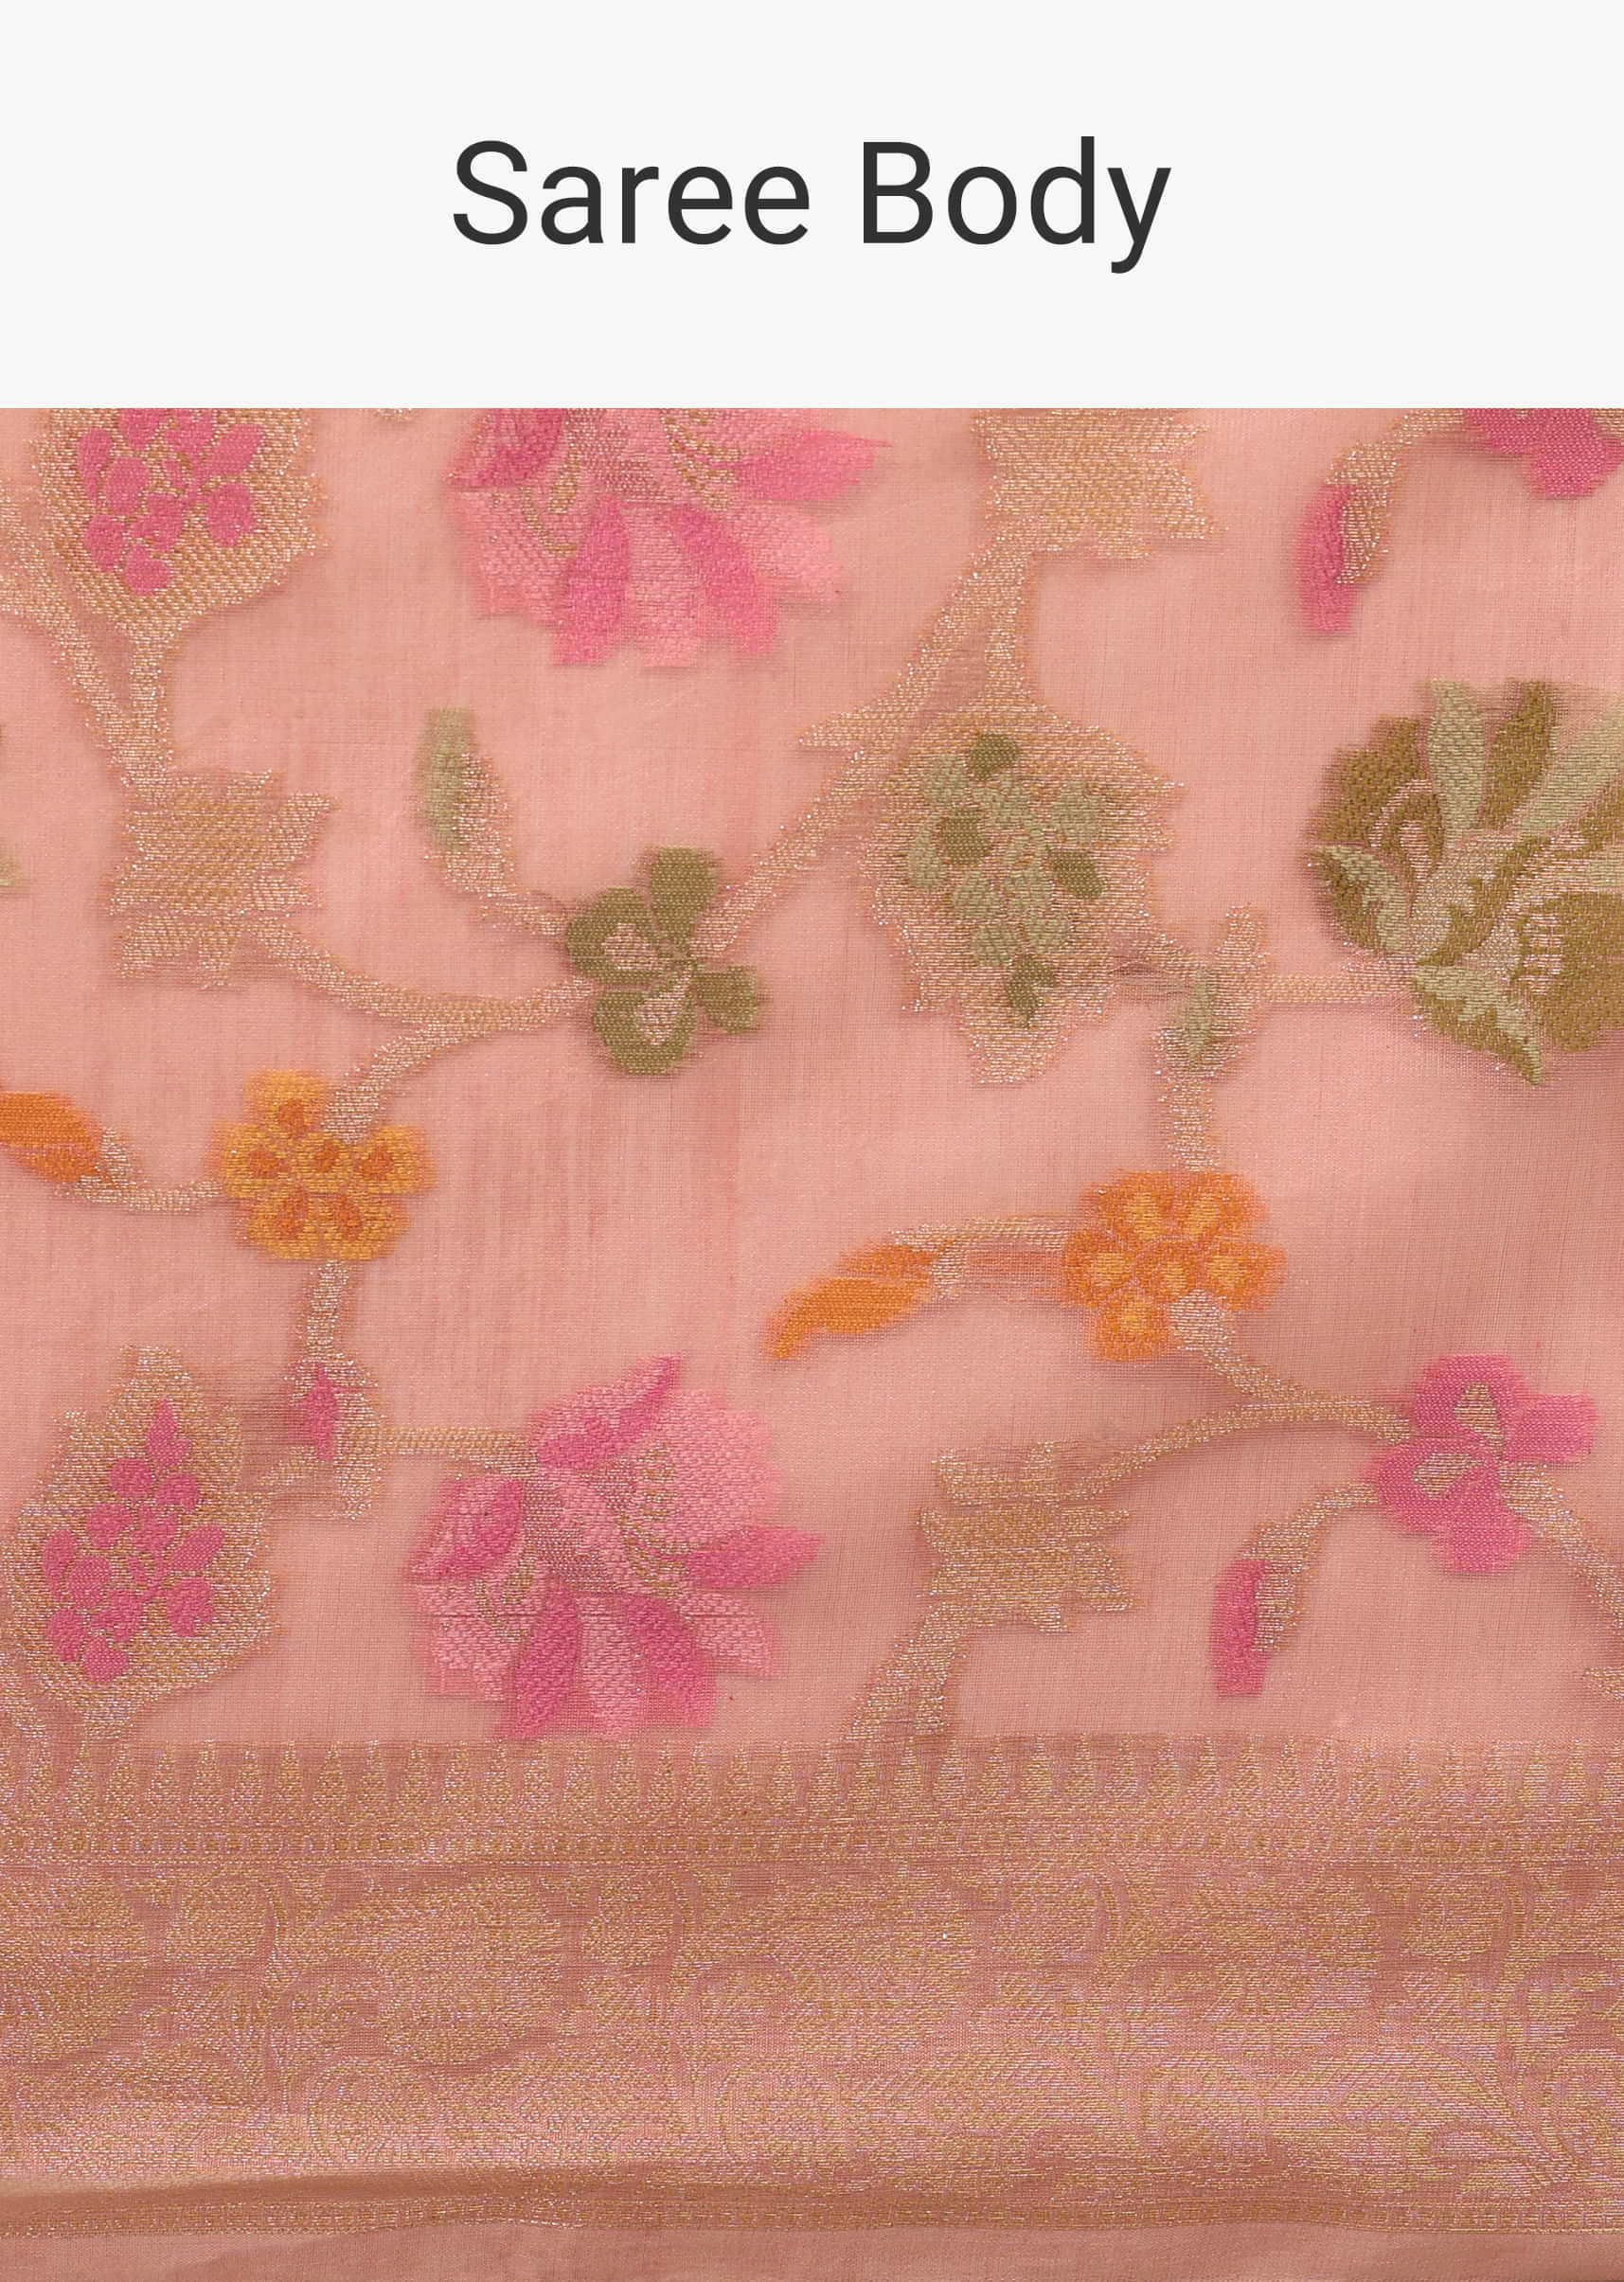 Blush Pink Saree In Banarsi Chanderi And Pure Handloom Cotton